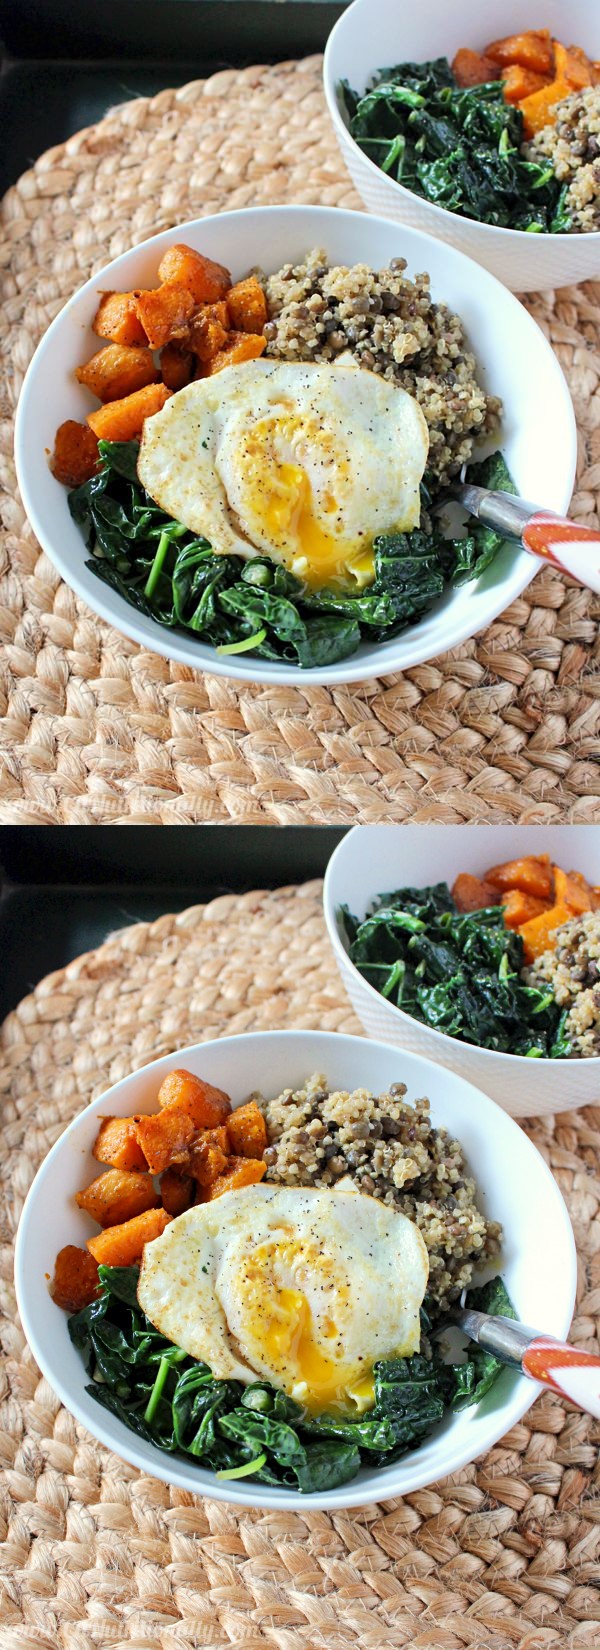 Quinoa and Lentil Power Bowl (gluten free, vegan option